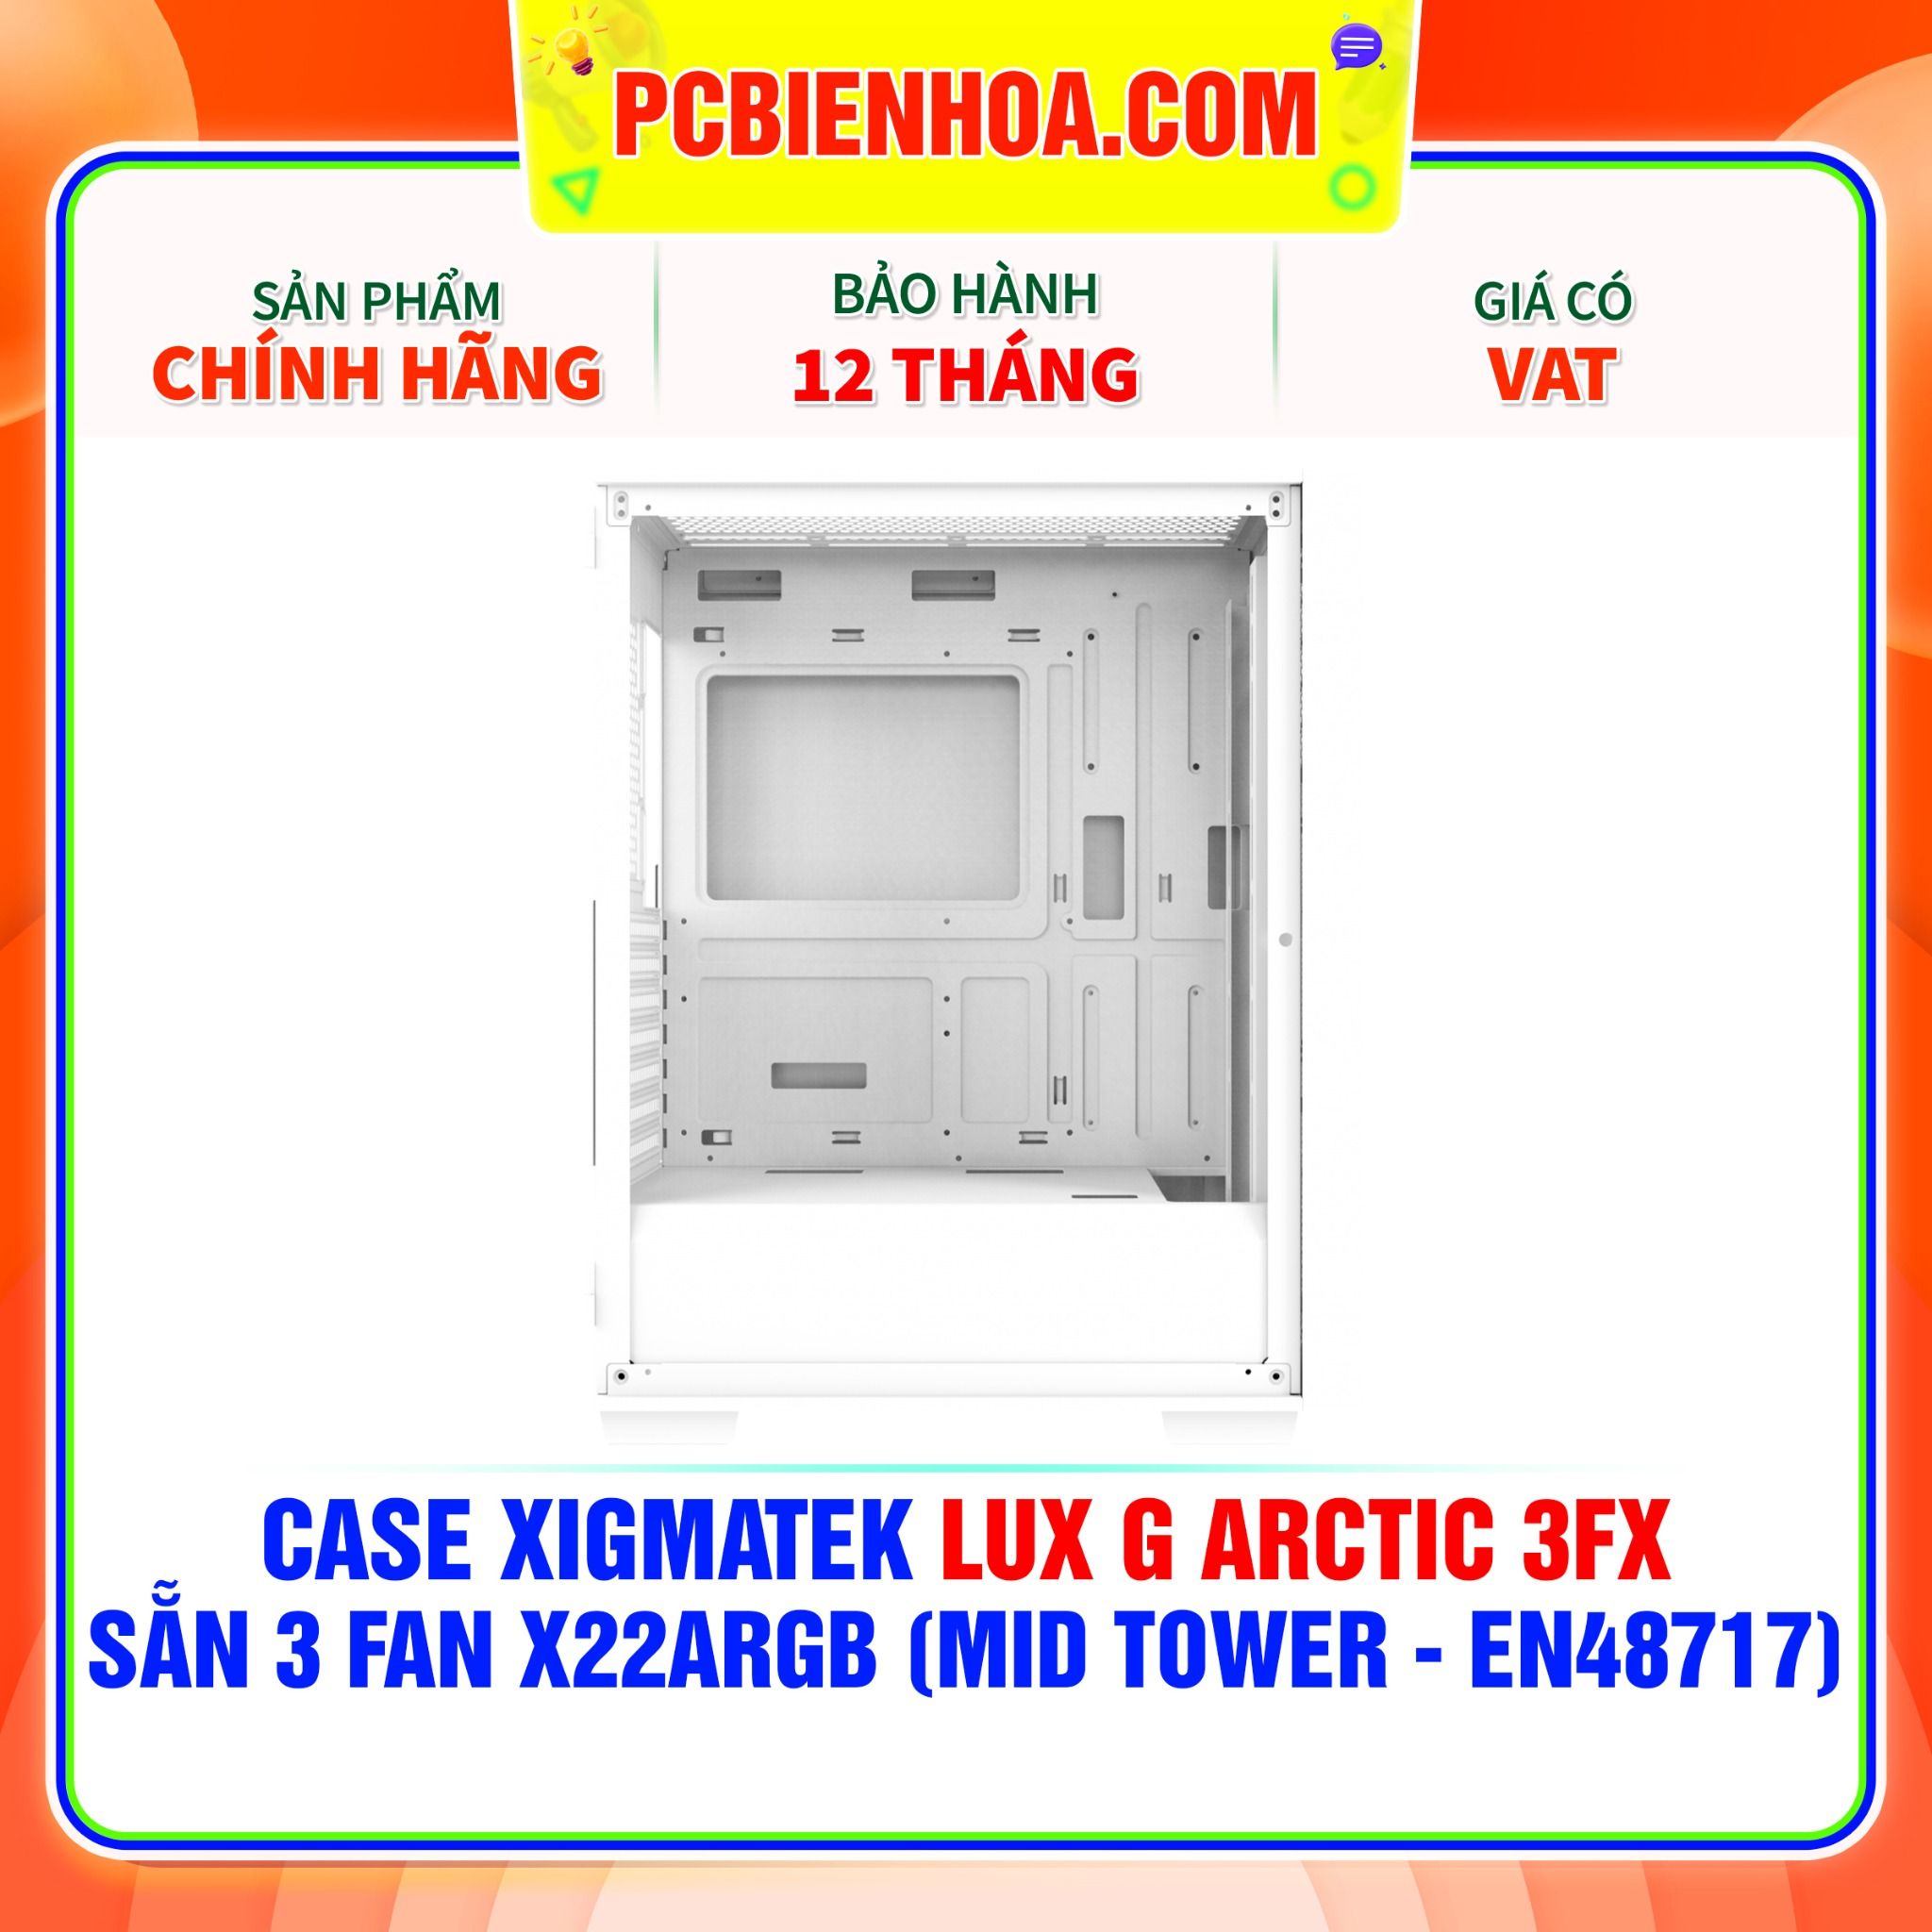  CASE XIGMATEK LUX G ARCTIC 3FX - SẴN 3 FAN X22ARGB ( MID TOWER - EN48717 ) 